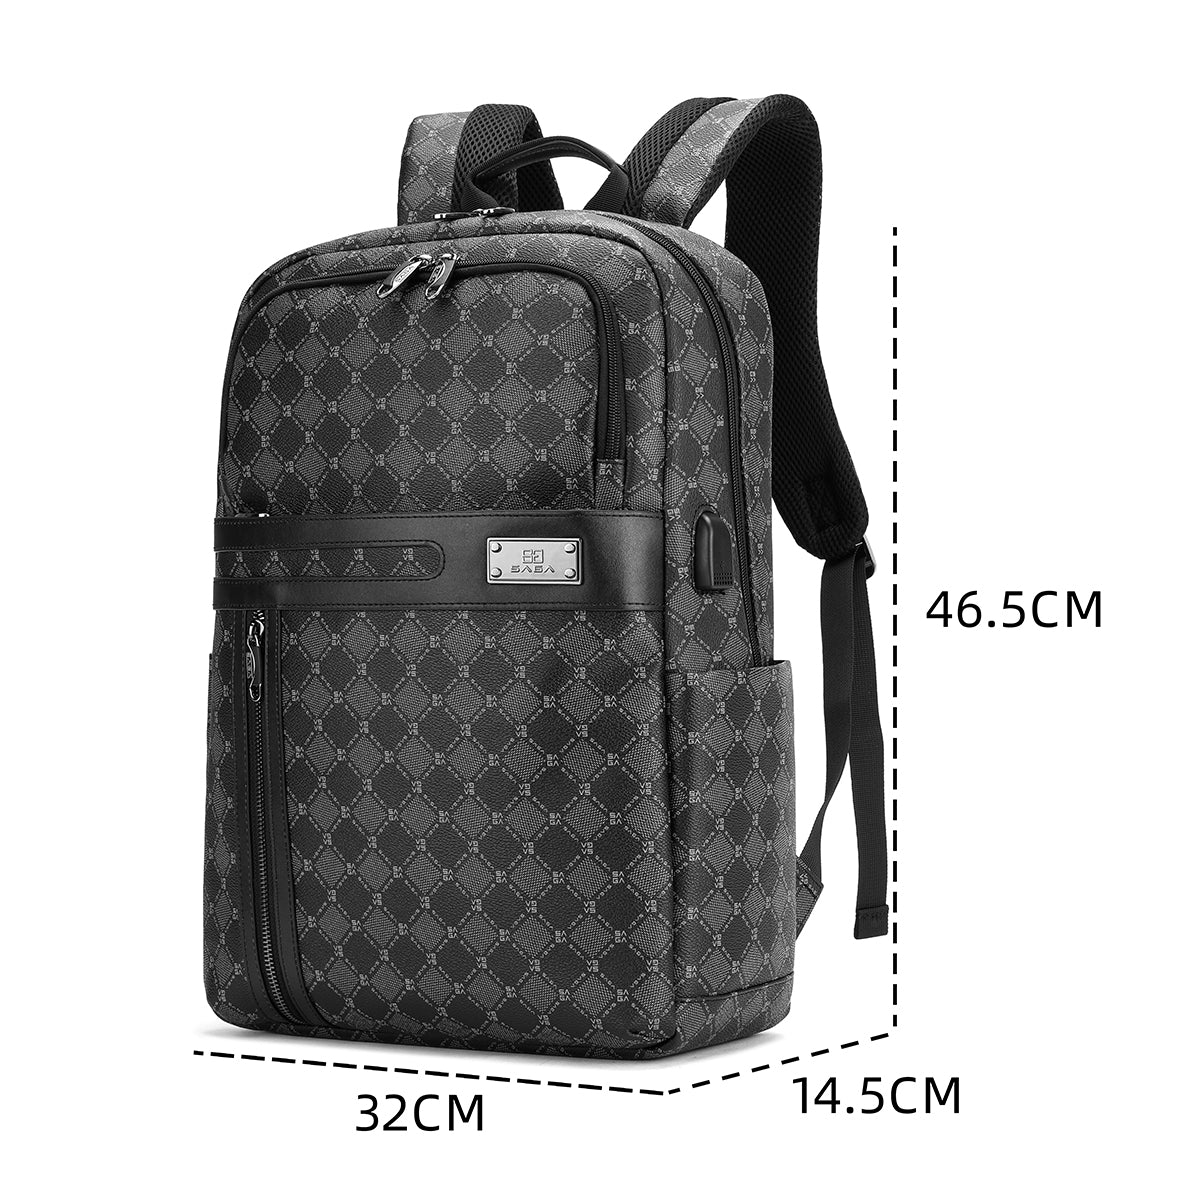 Luxurious 7-piece travel bag set, gray color